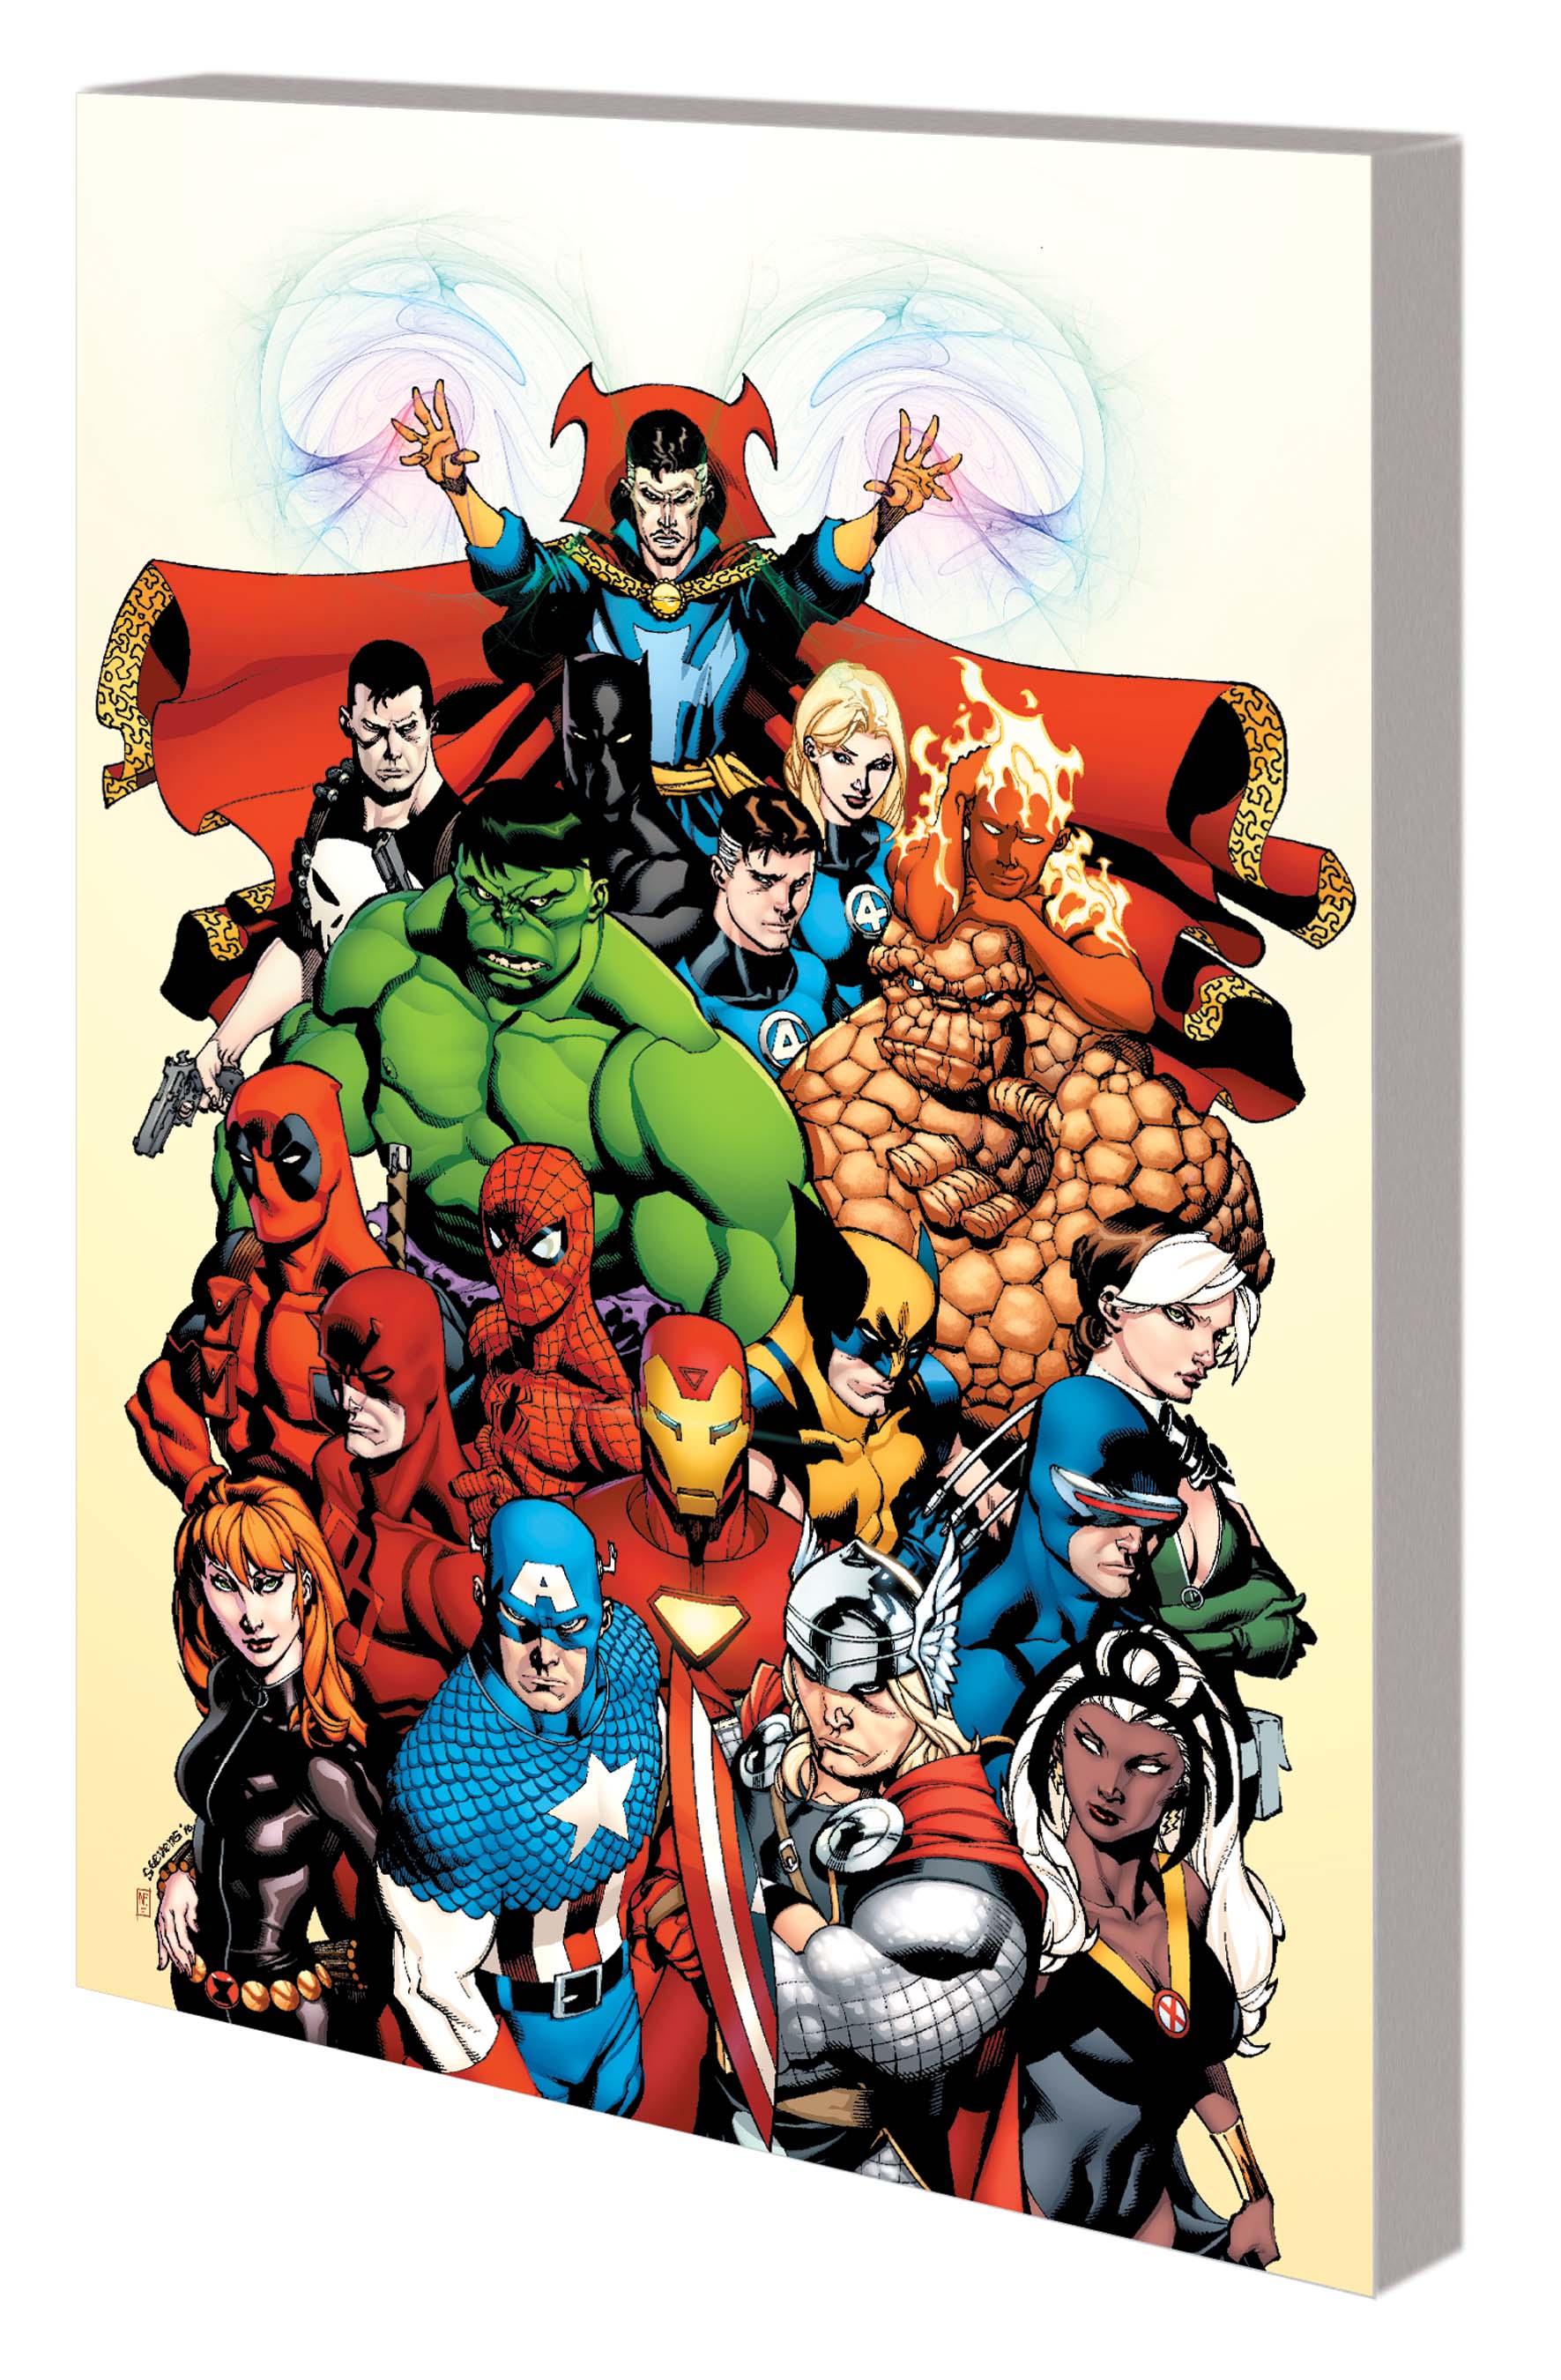 Origins of Marvel Comics (Trade Paperback)